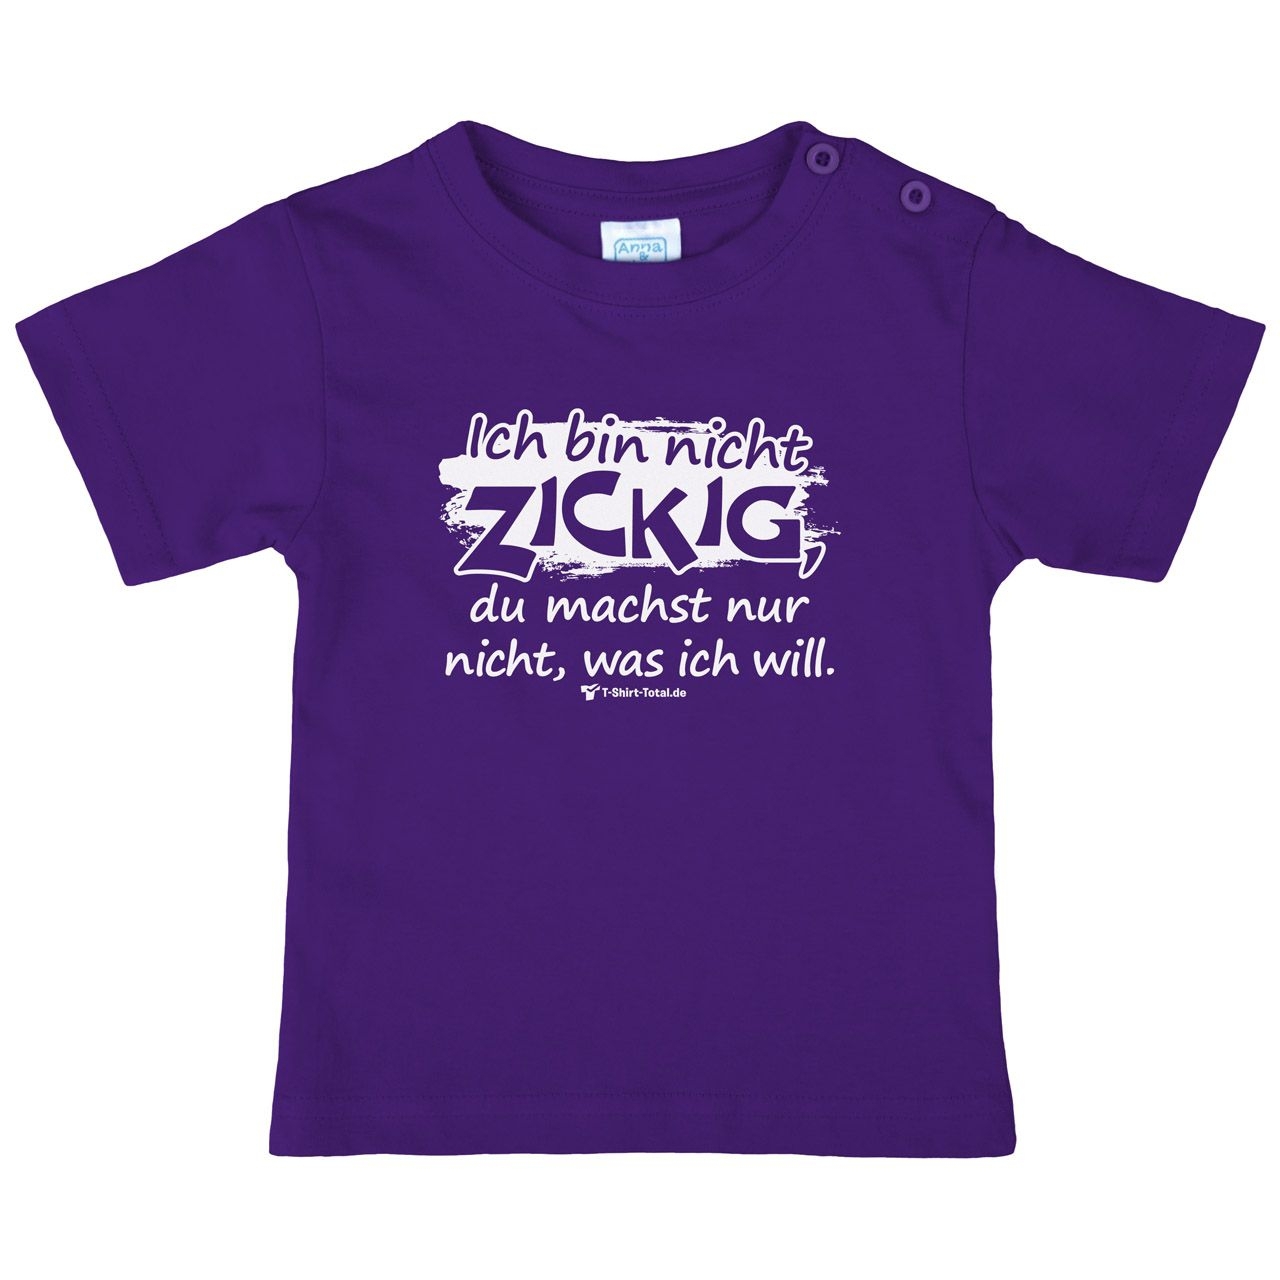 Bin nicht zickig Kinder T-Shirt lila 92